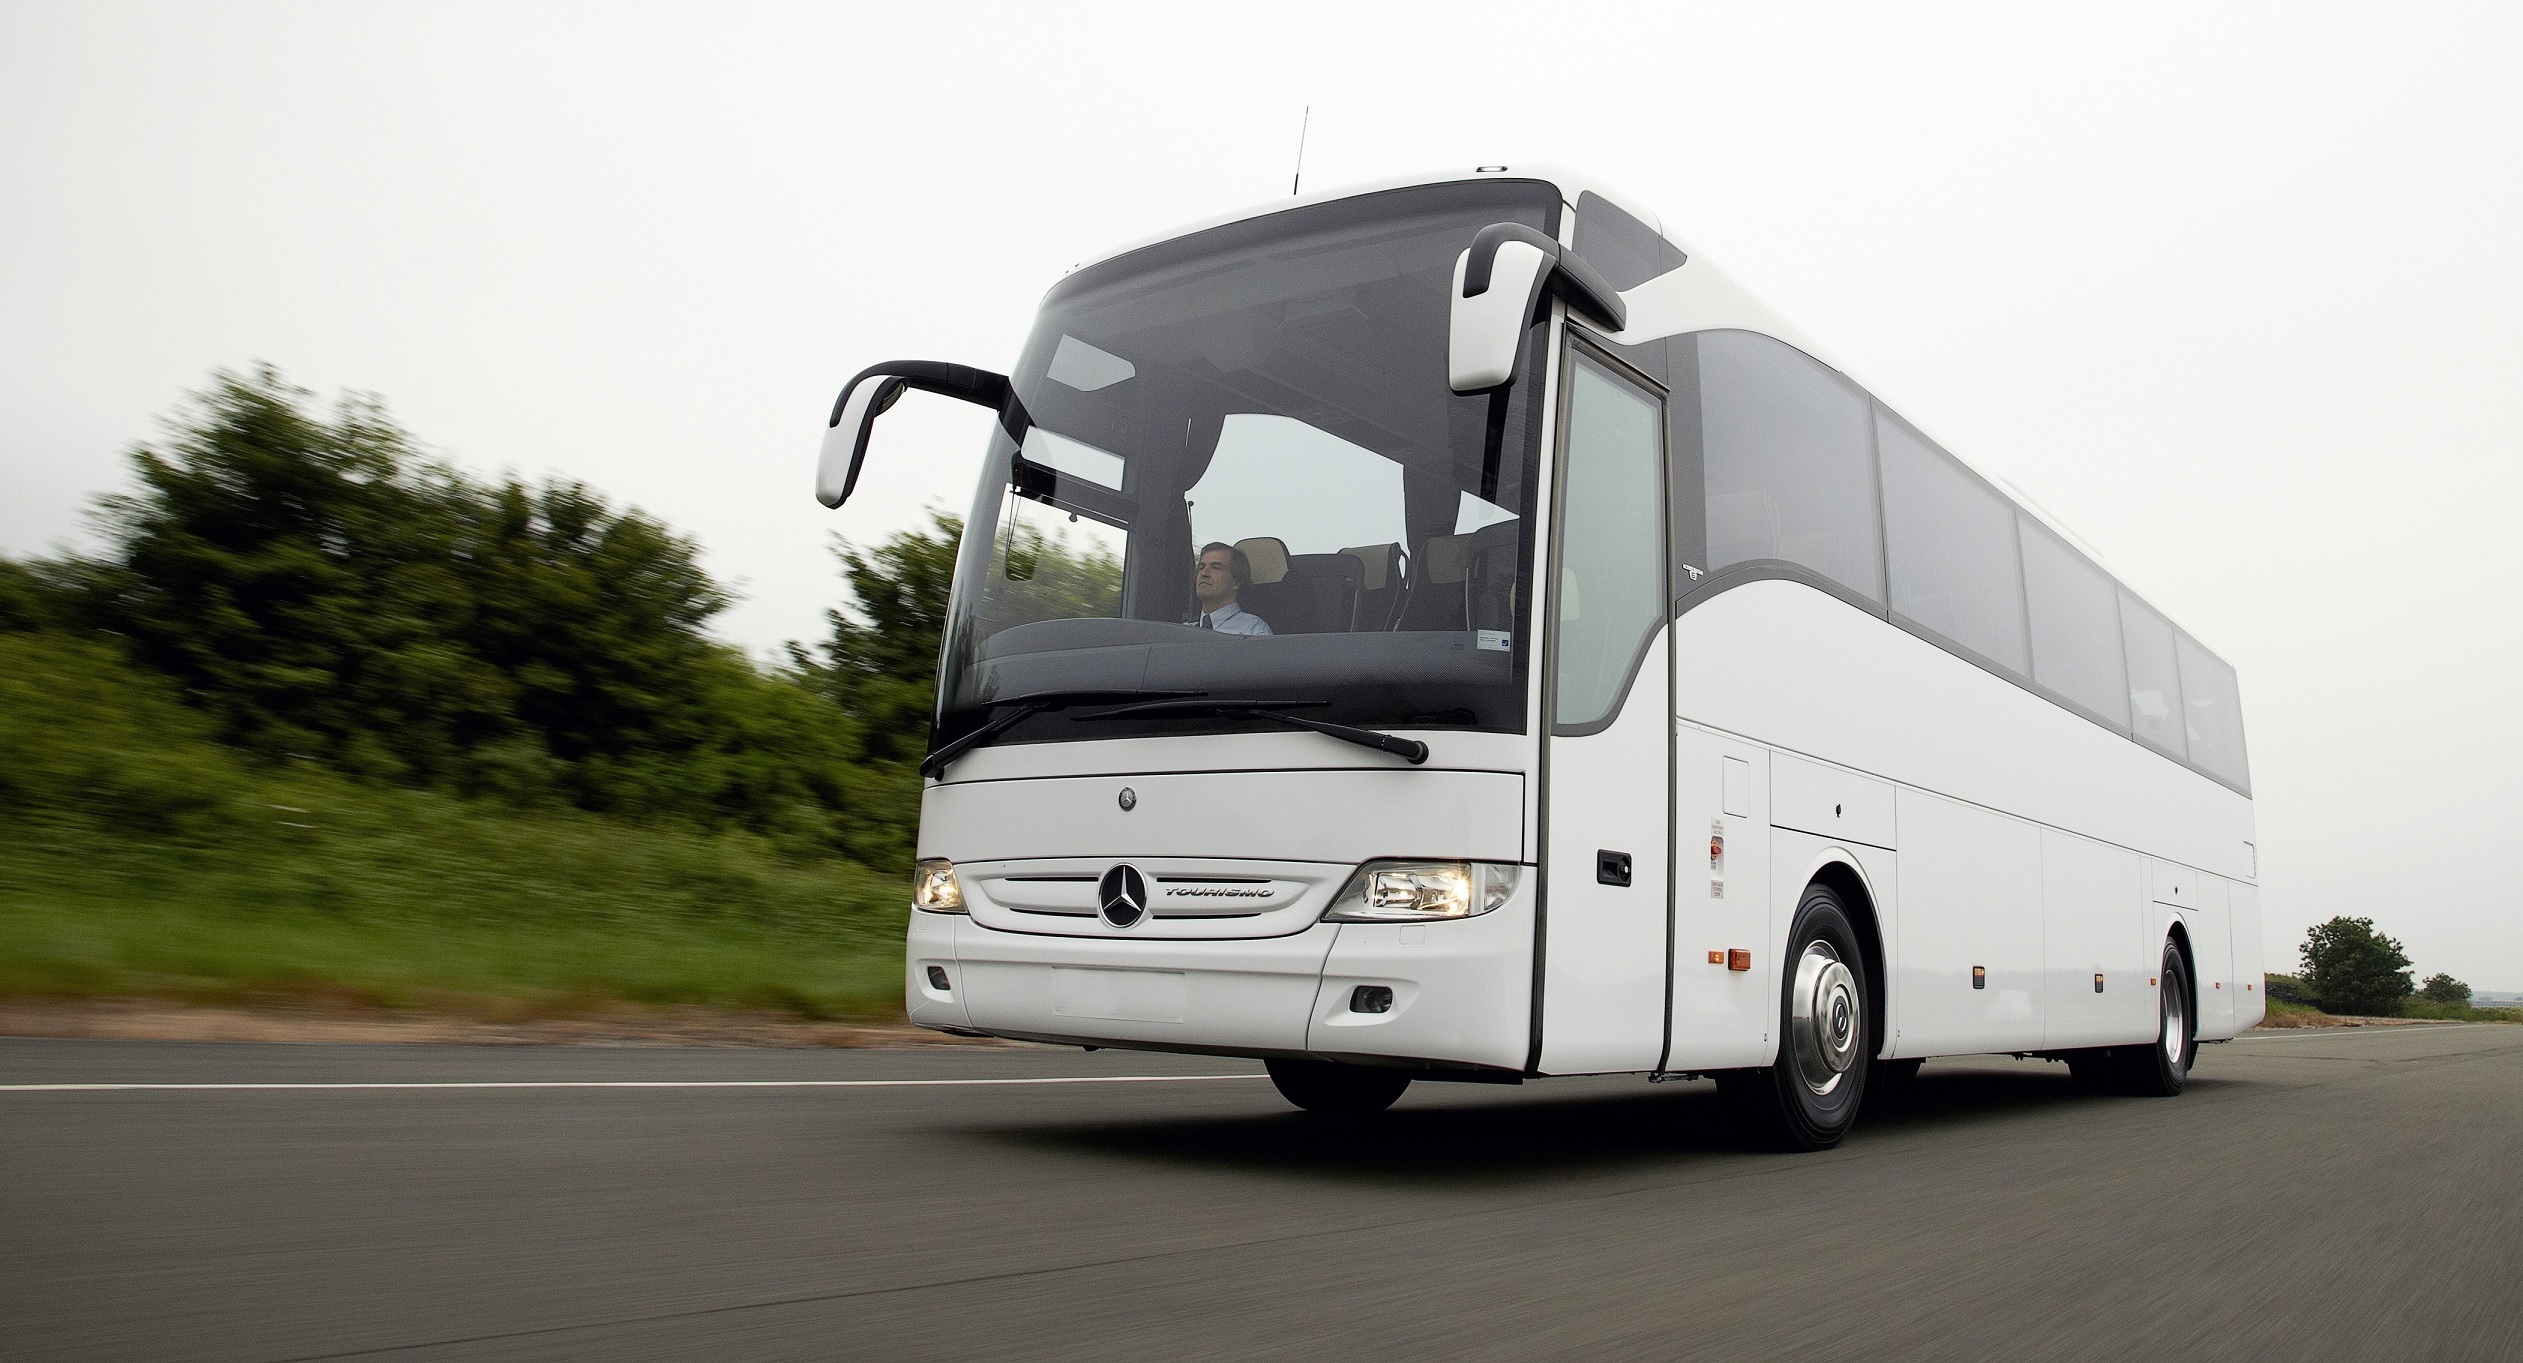 EVM PSVAR conversion on Mercedes-Benz Tourismo